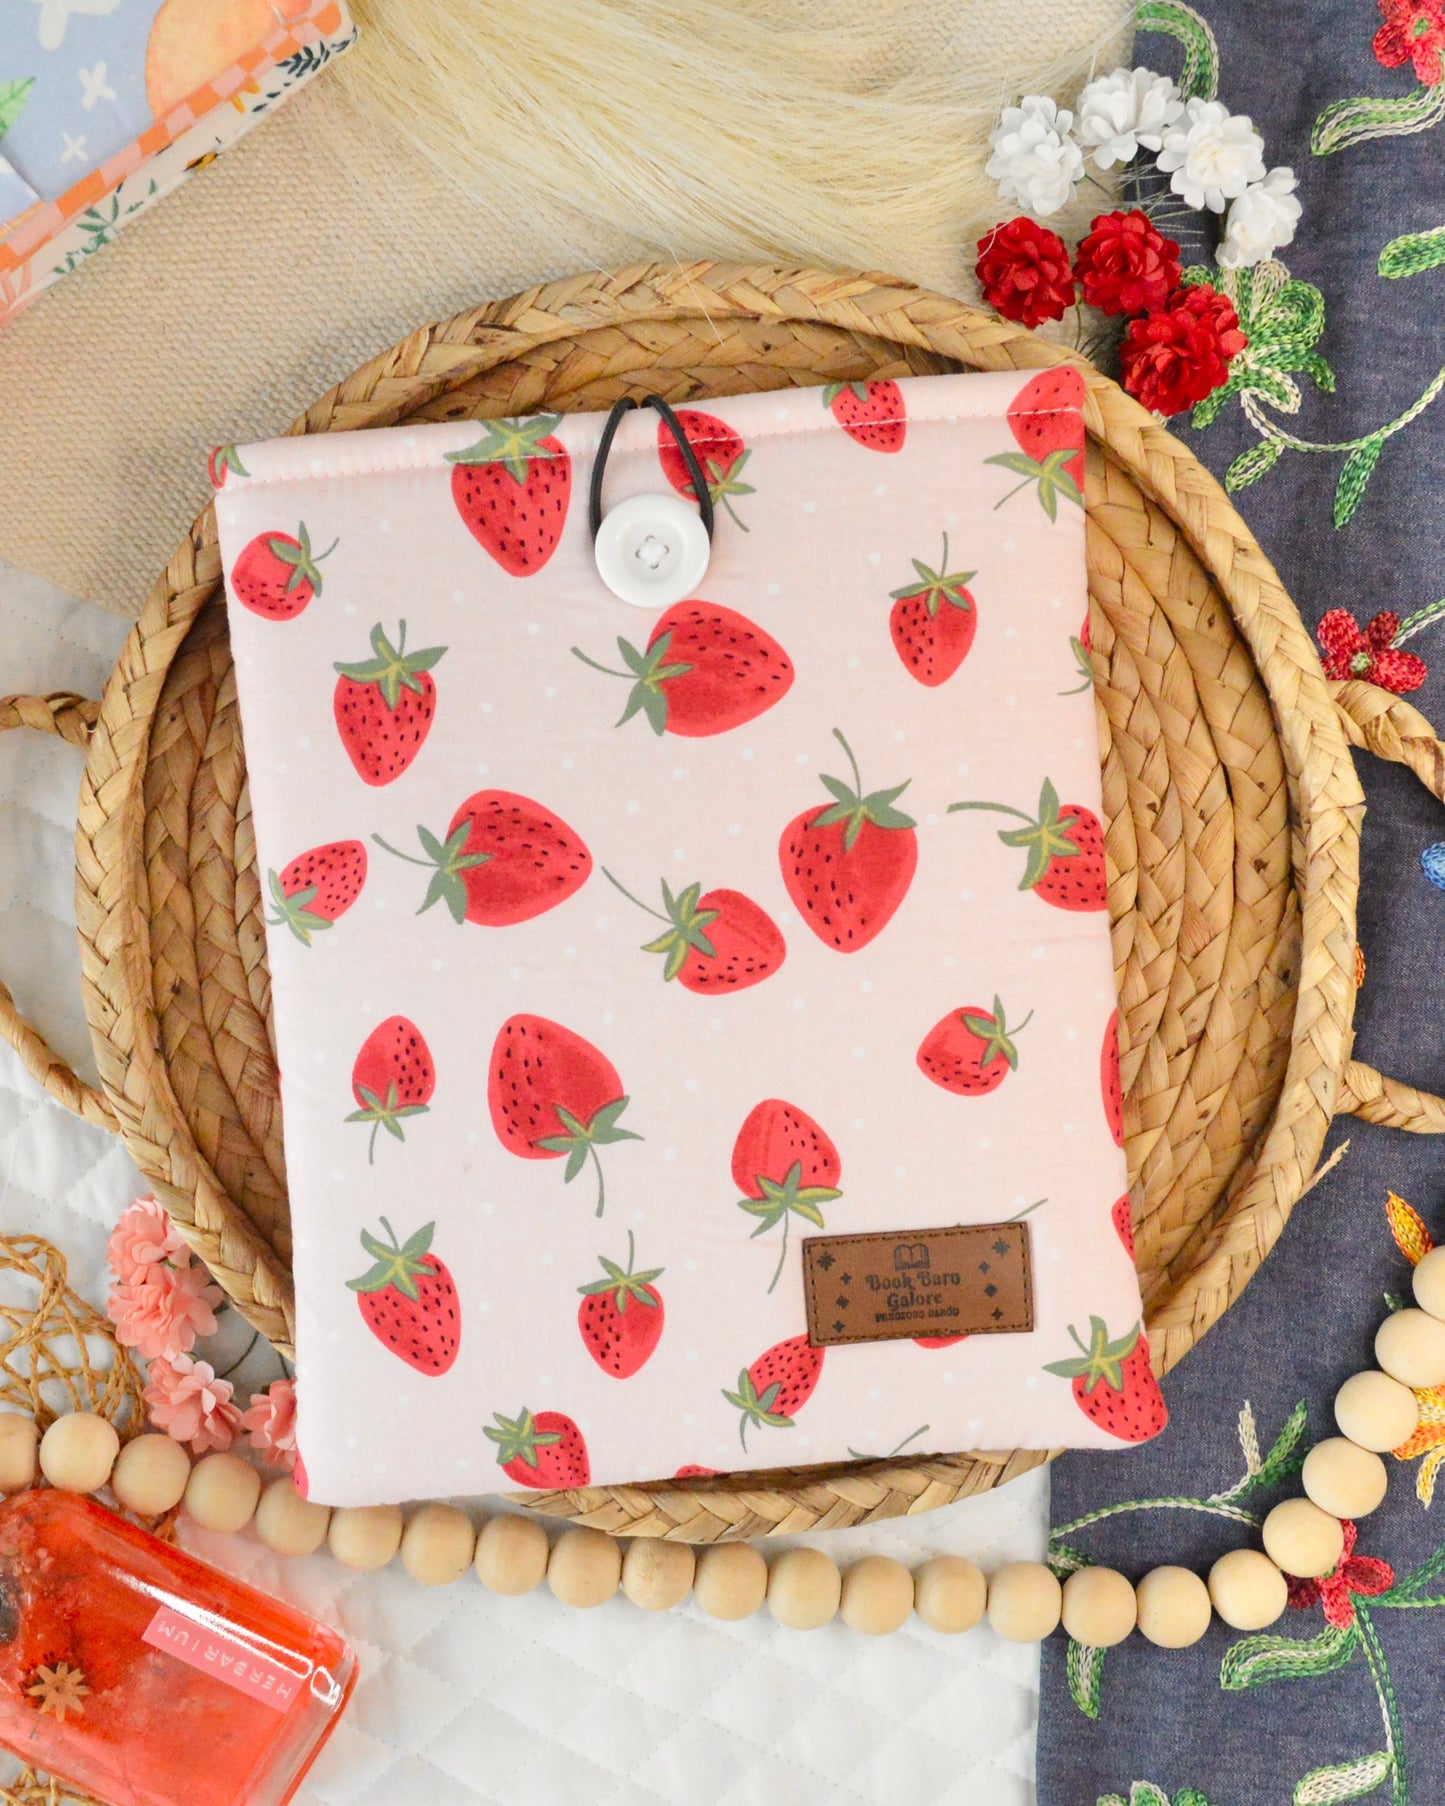 Strawberry Book Sleeve